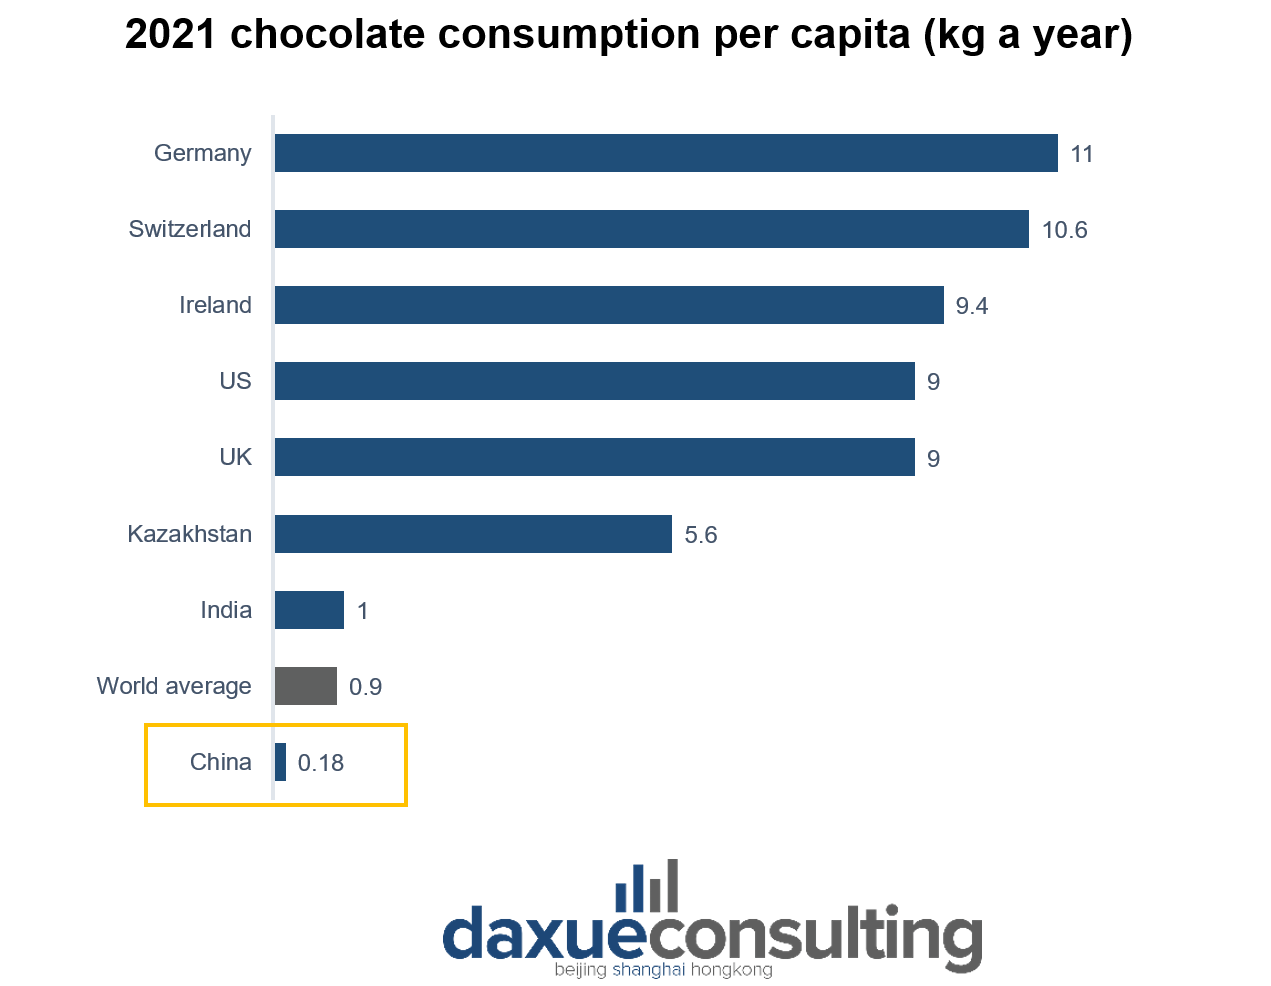 China's chocolate consumption